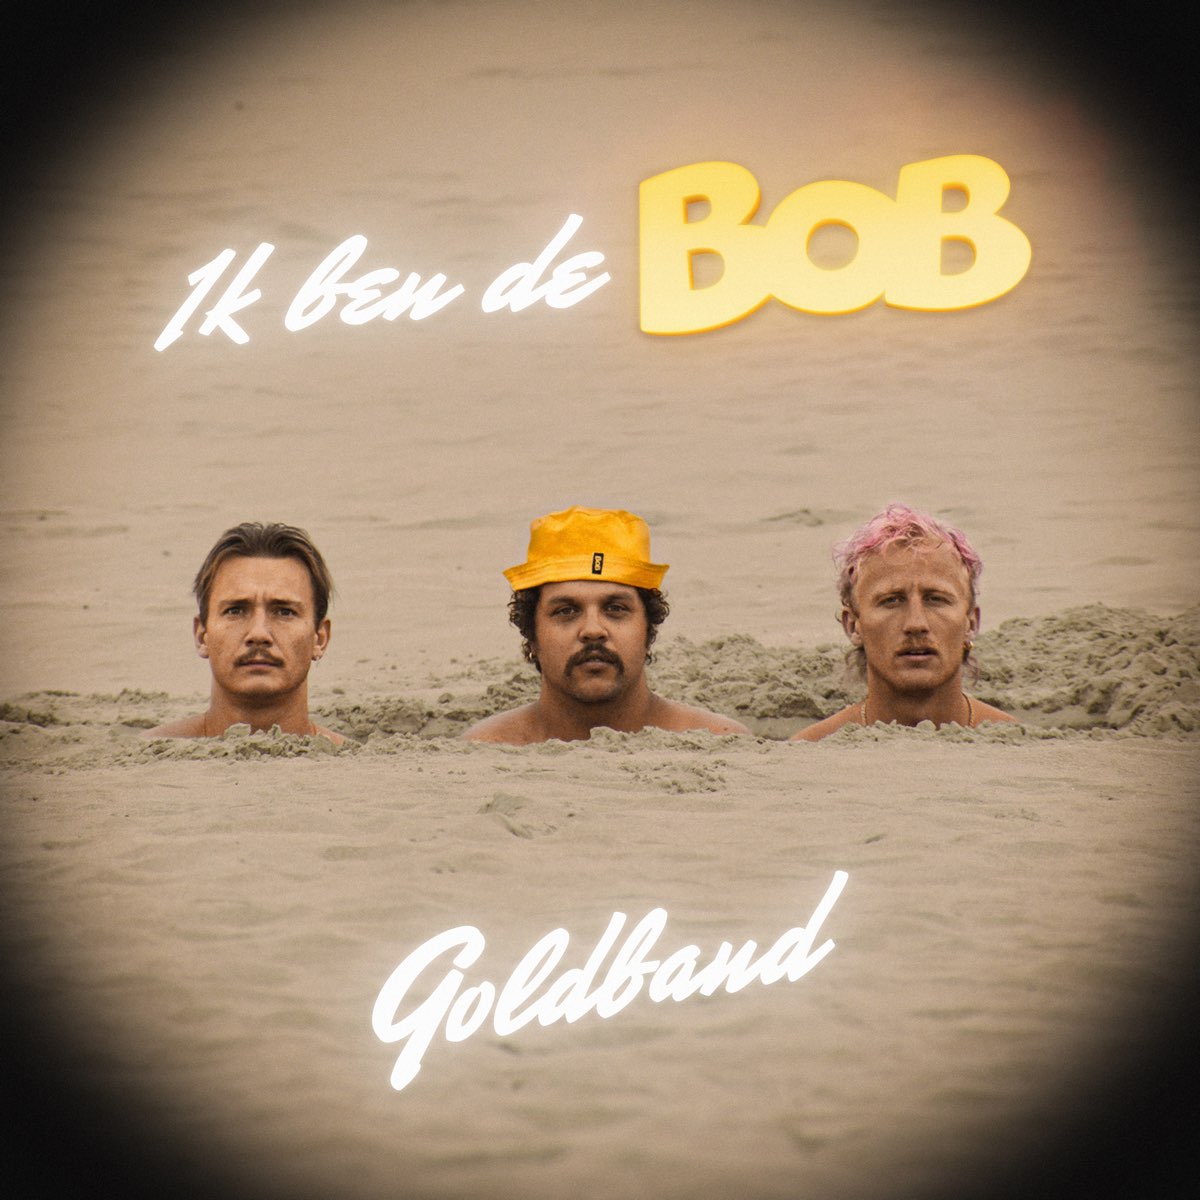 Ik ben de BOB (feat. Goldband) - Single by BOB on Apple Music